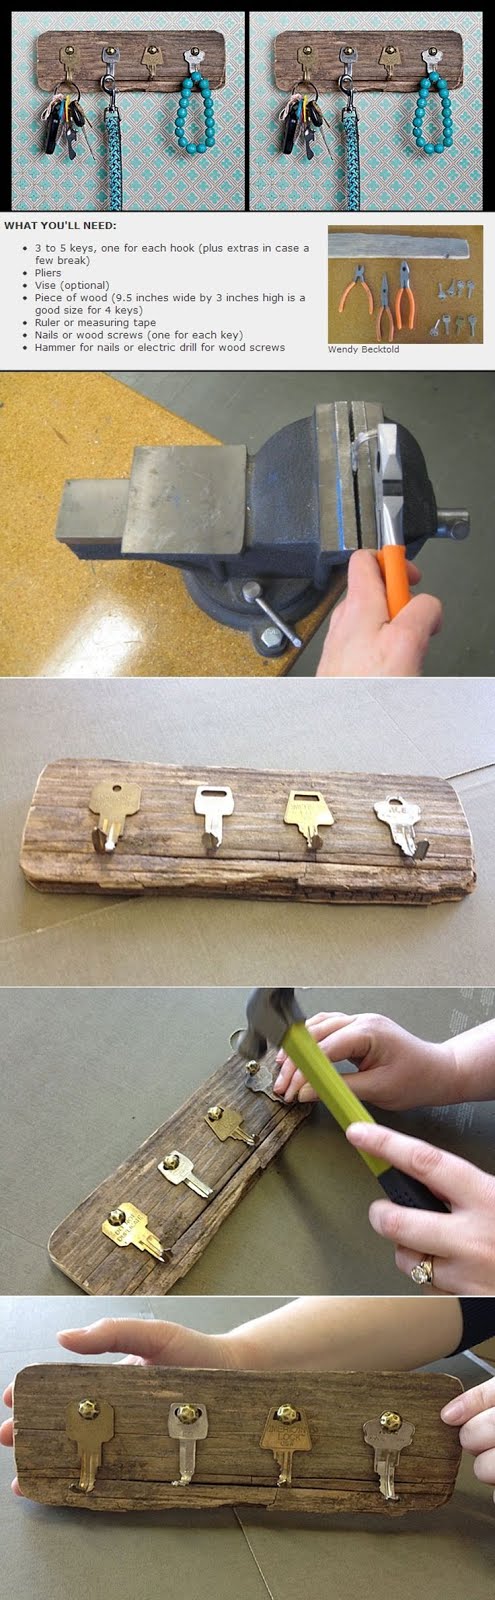 Reaproveite madeira e chaves